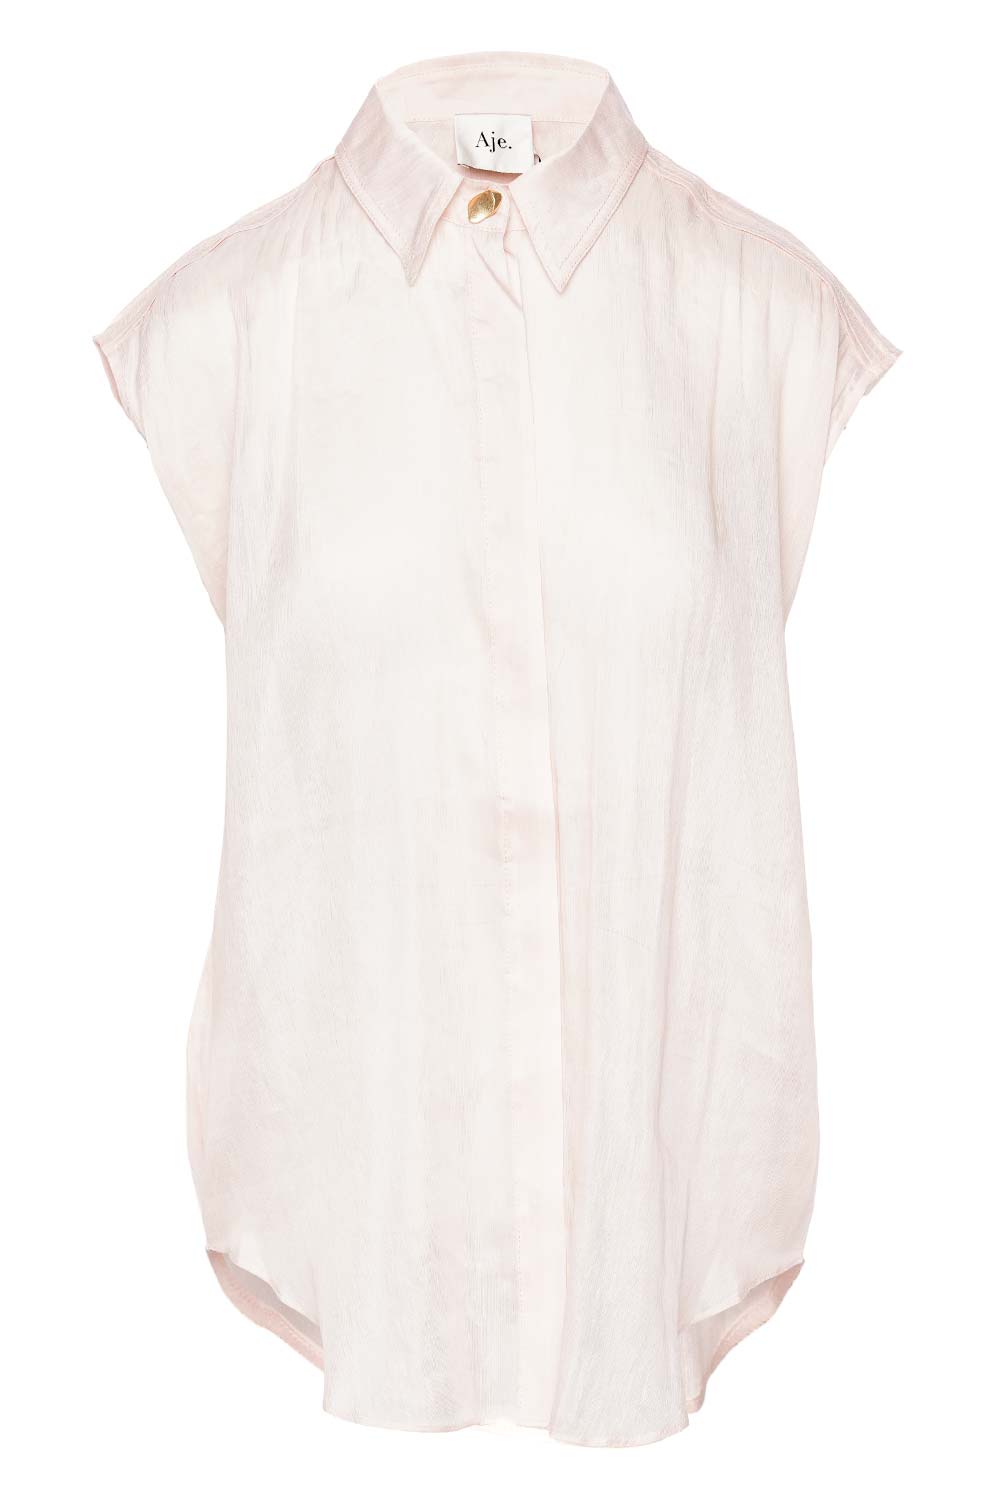 Aje. Solana Soft Pink Sleeveless Shirt